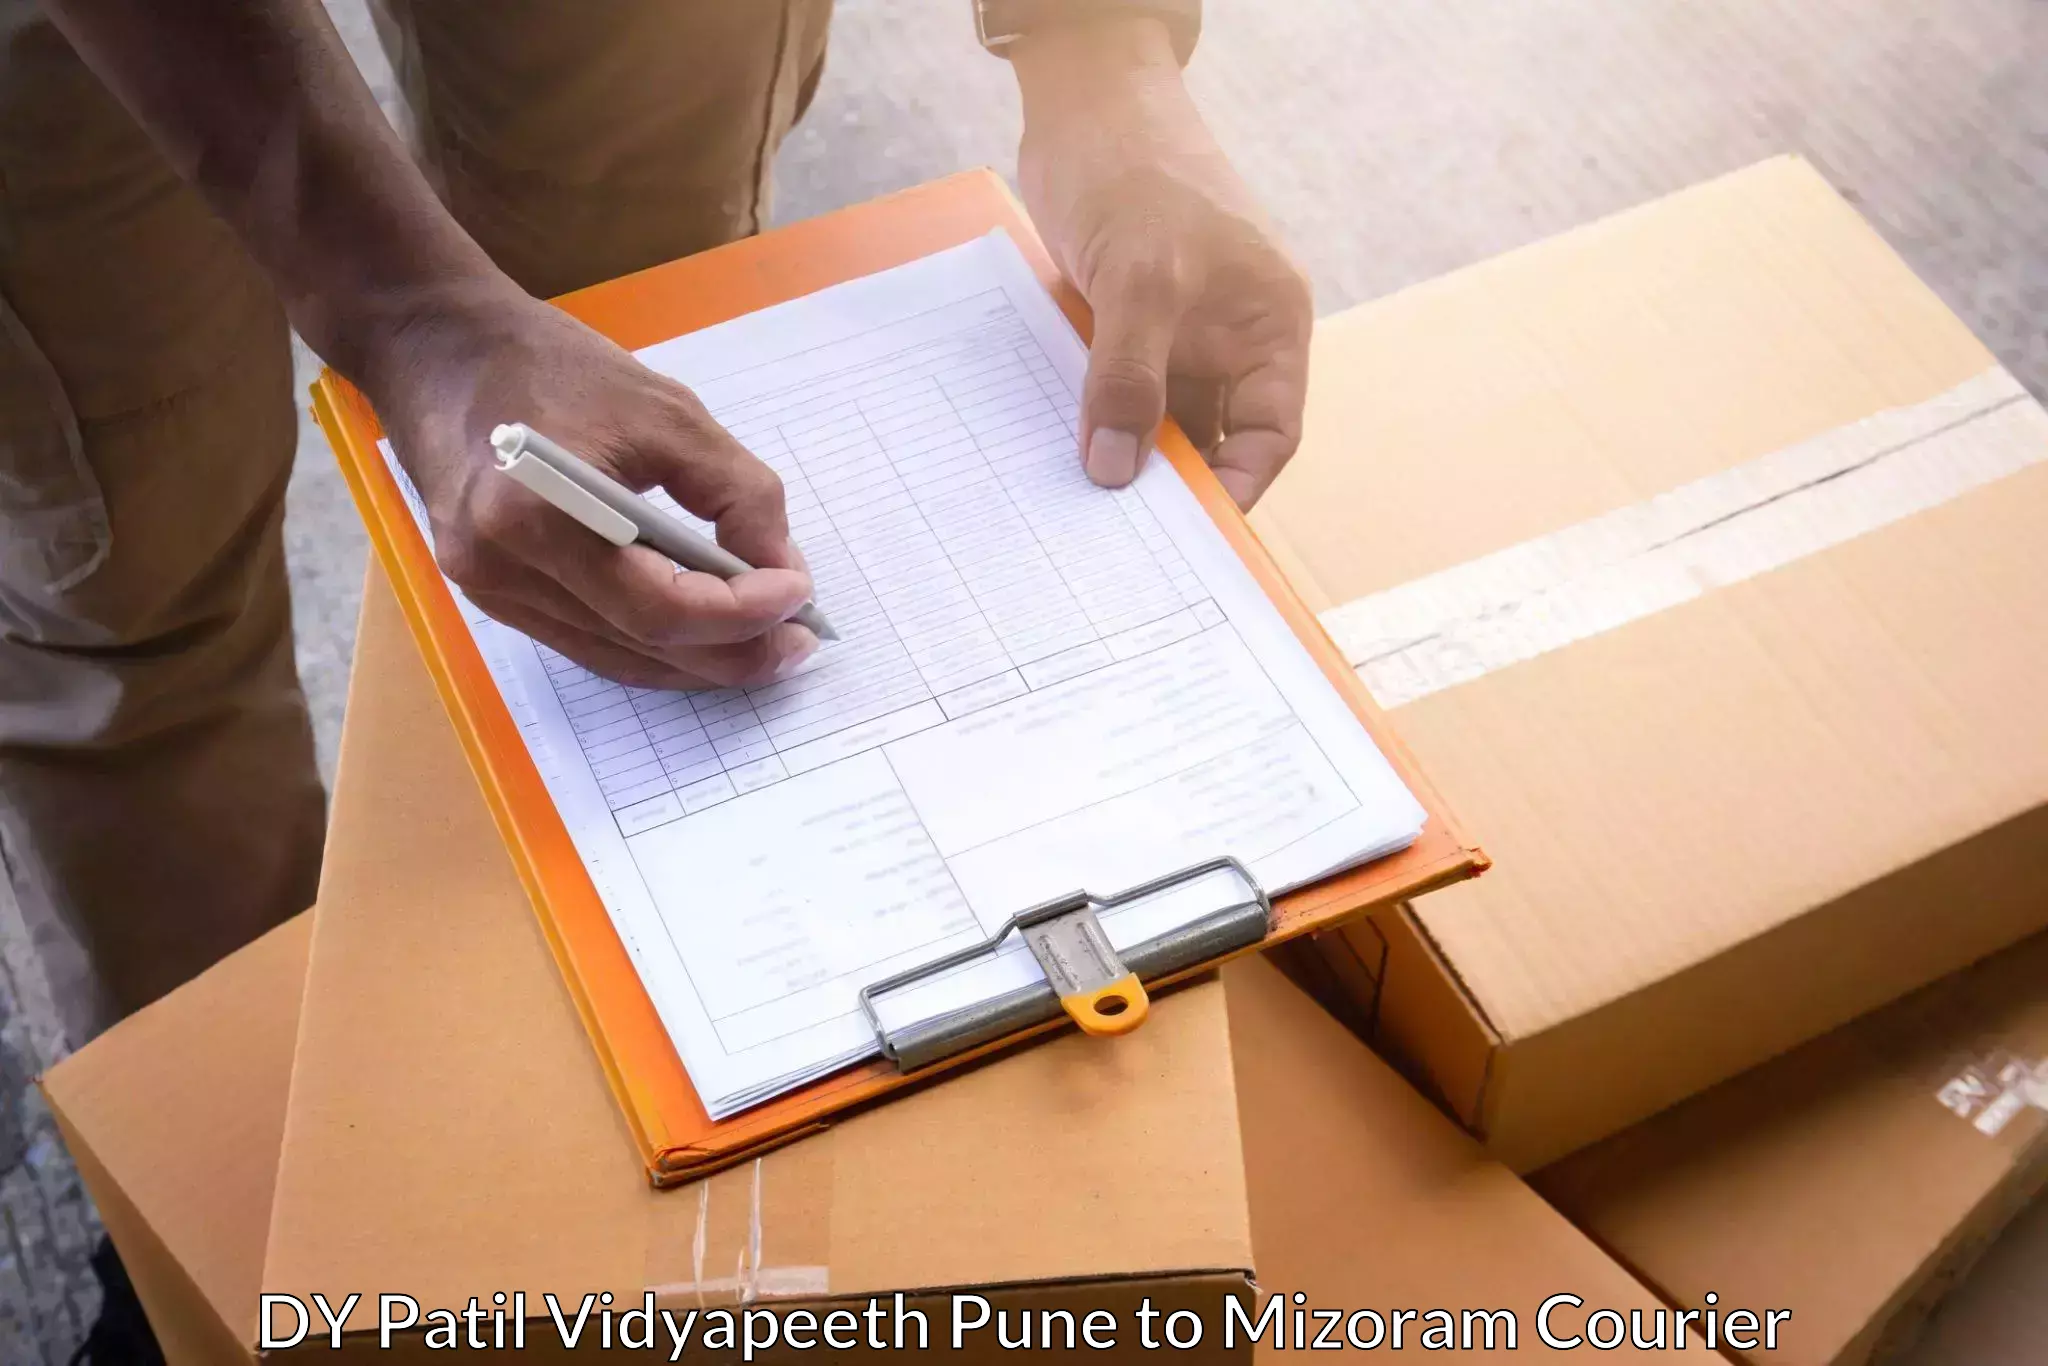 International parcel service DY Patil Vidyapeeth Pune to Siaha